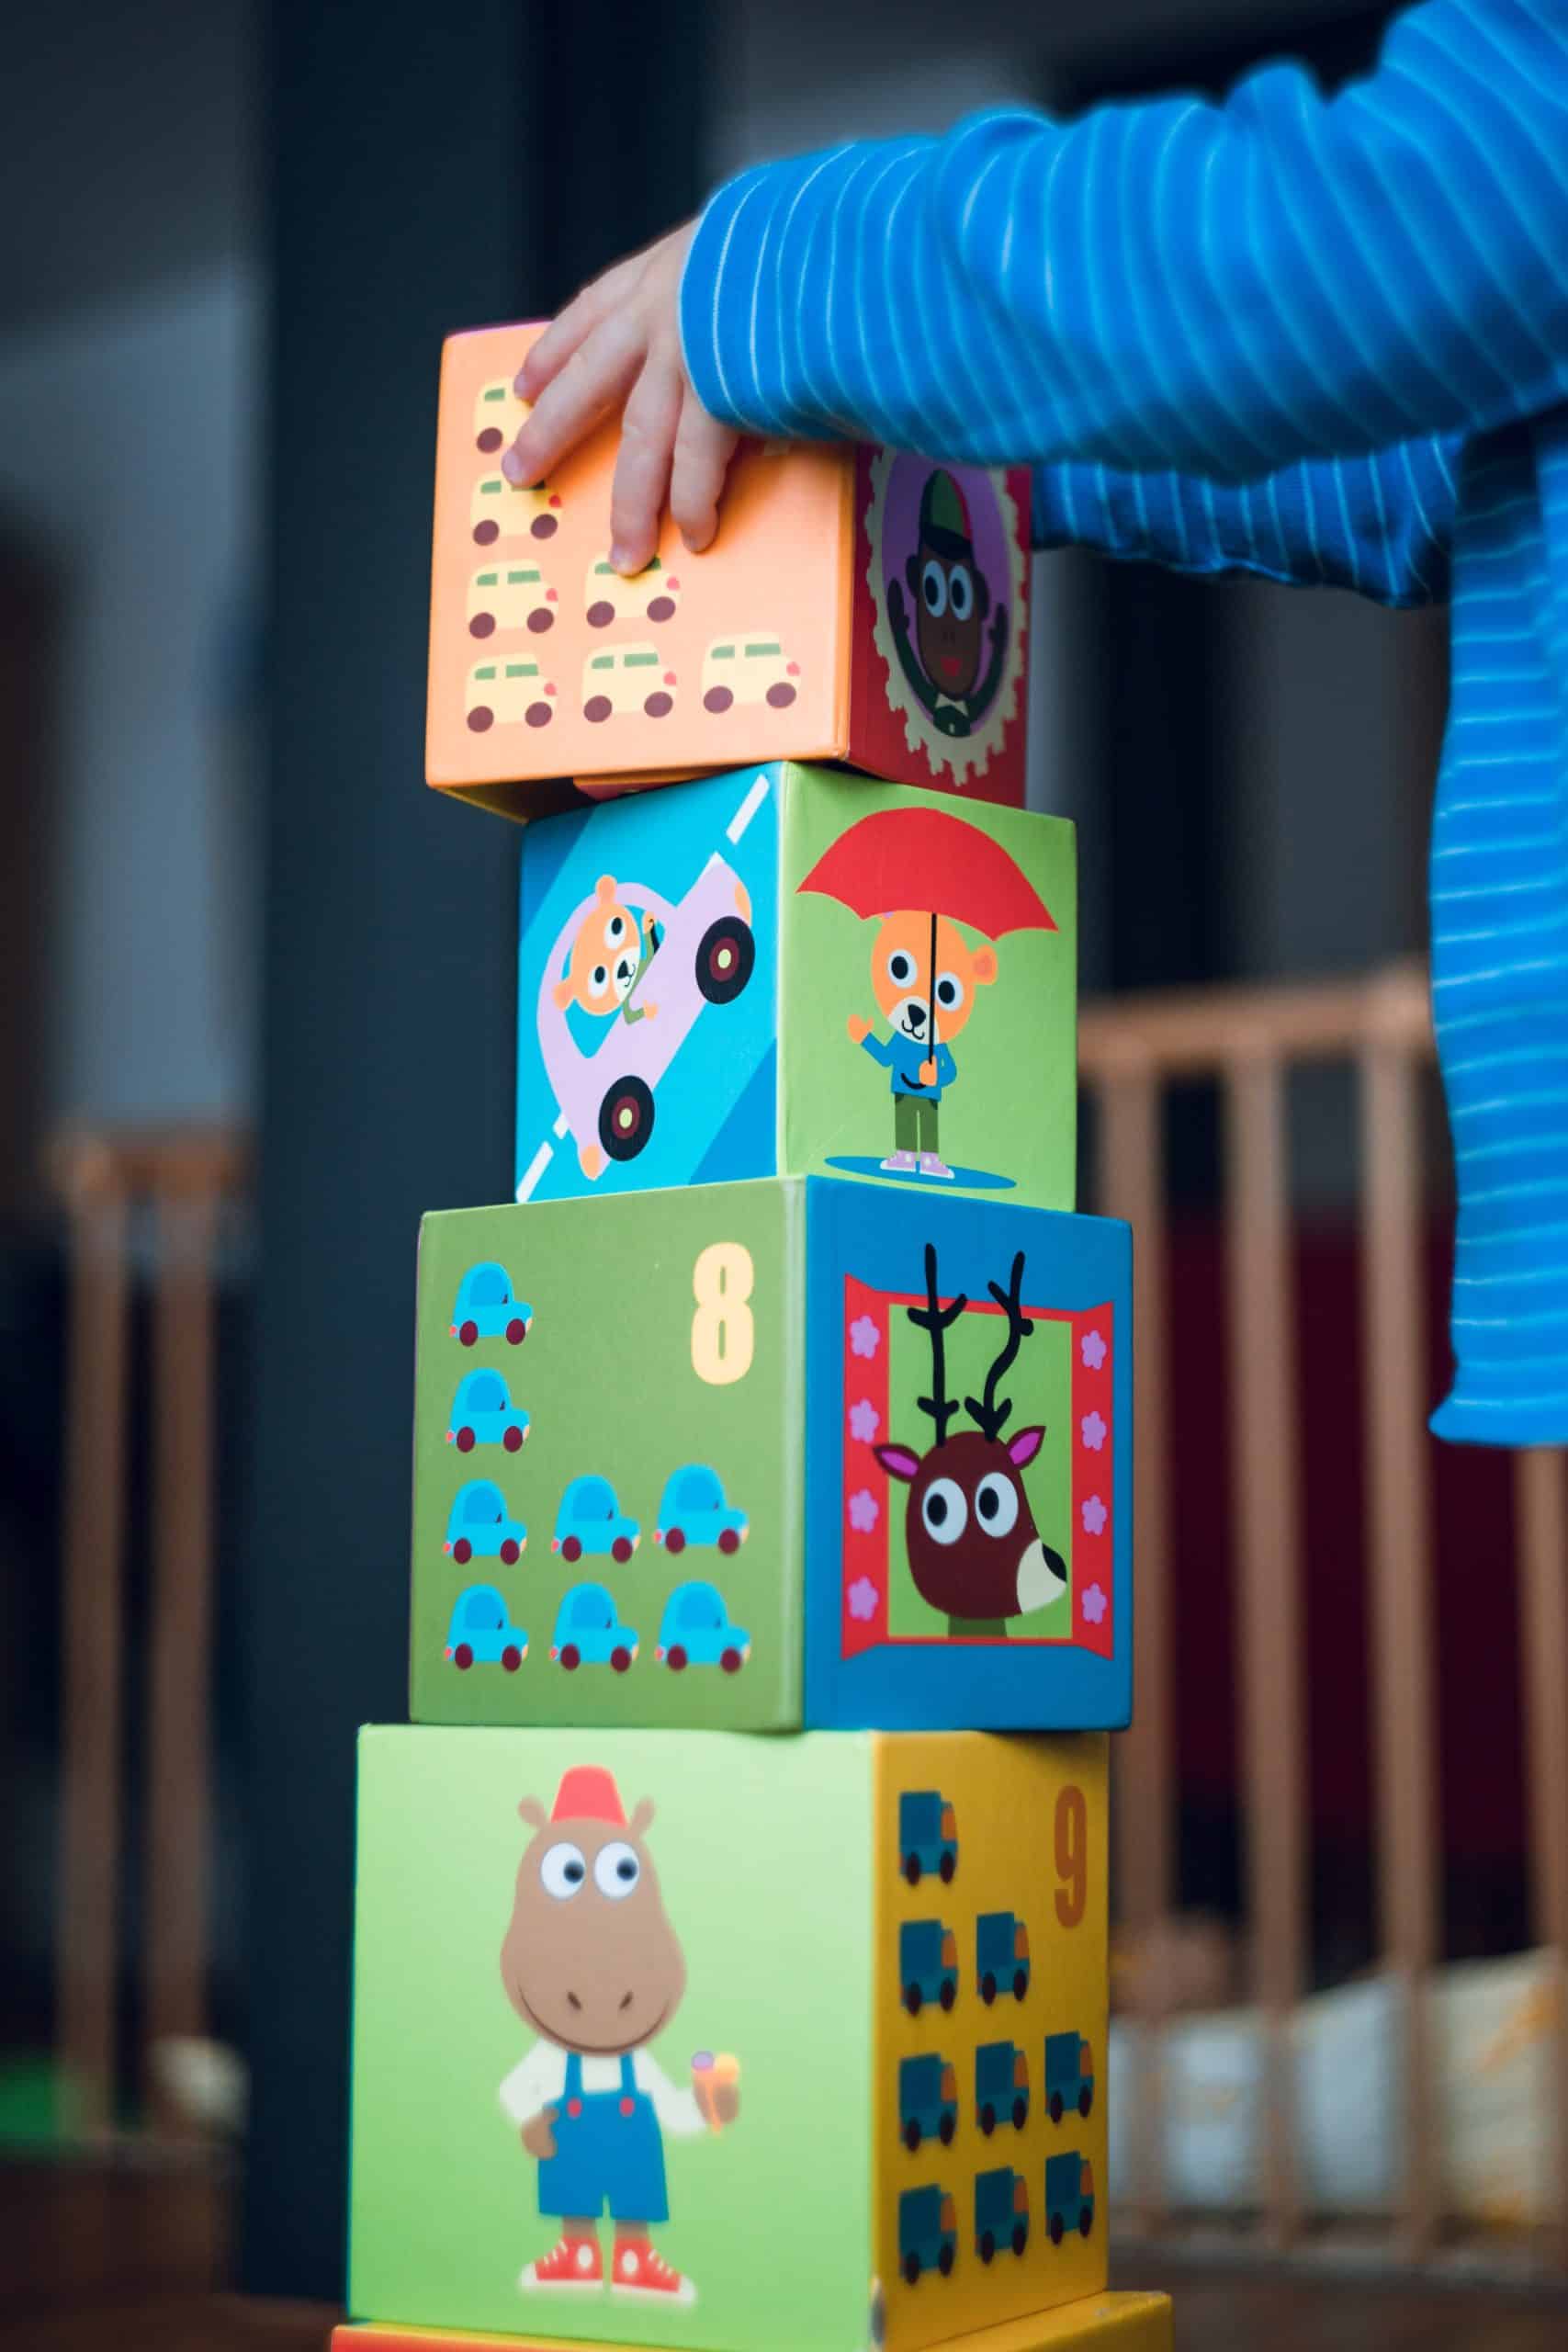 Child building blocks. Photo by Markus Spiske on Unsplash